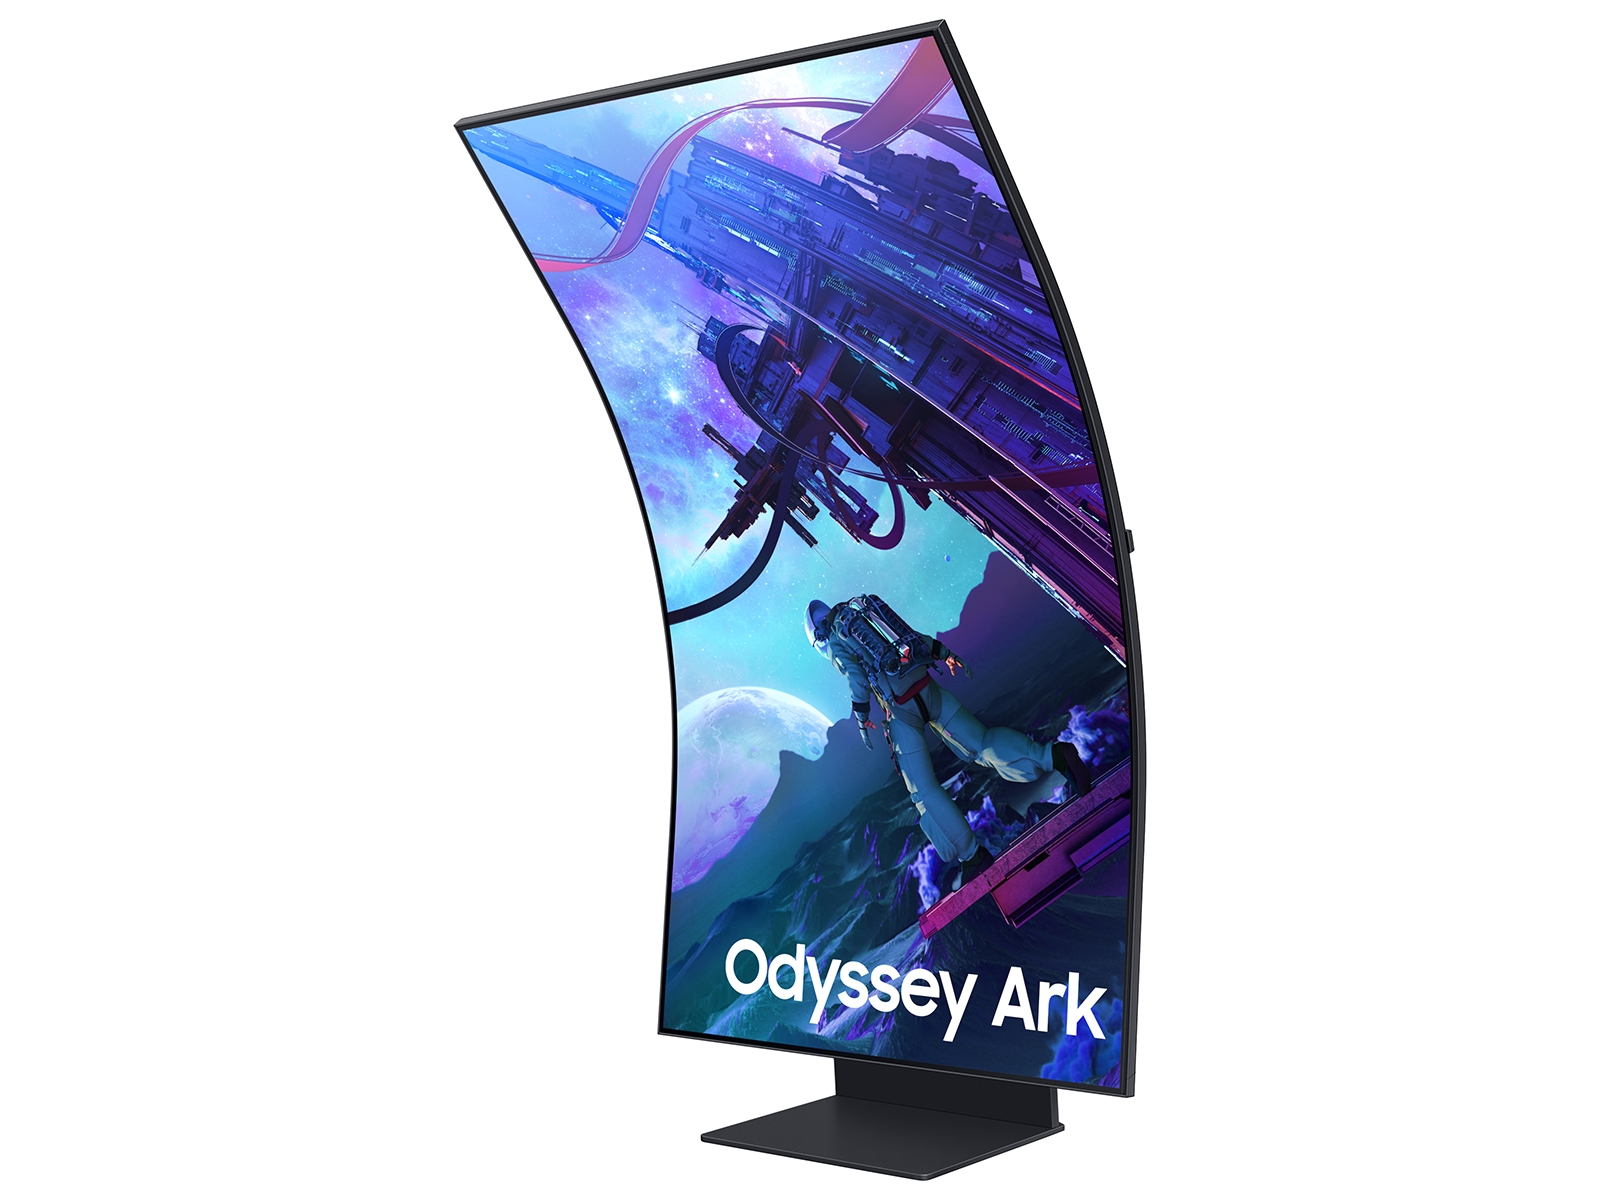 55” Odyssey Ark 4K UHD 165Hz 1ms Quantum Mini-LED Curved Gaming